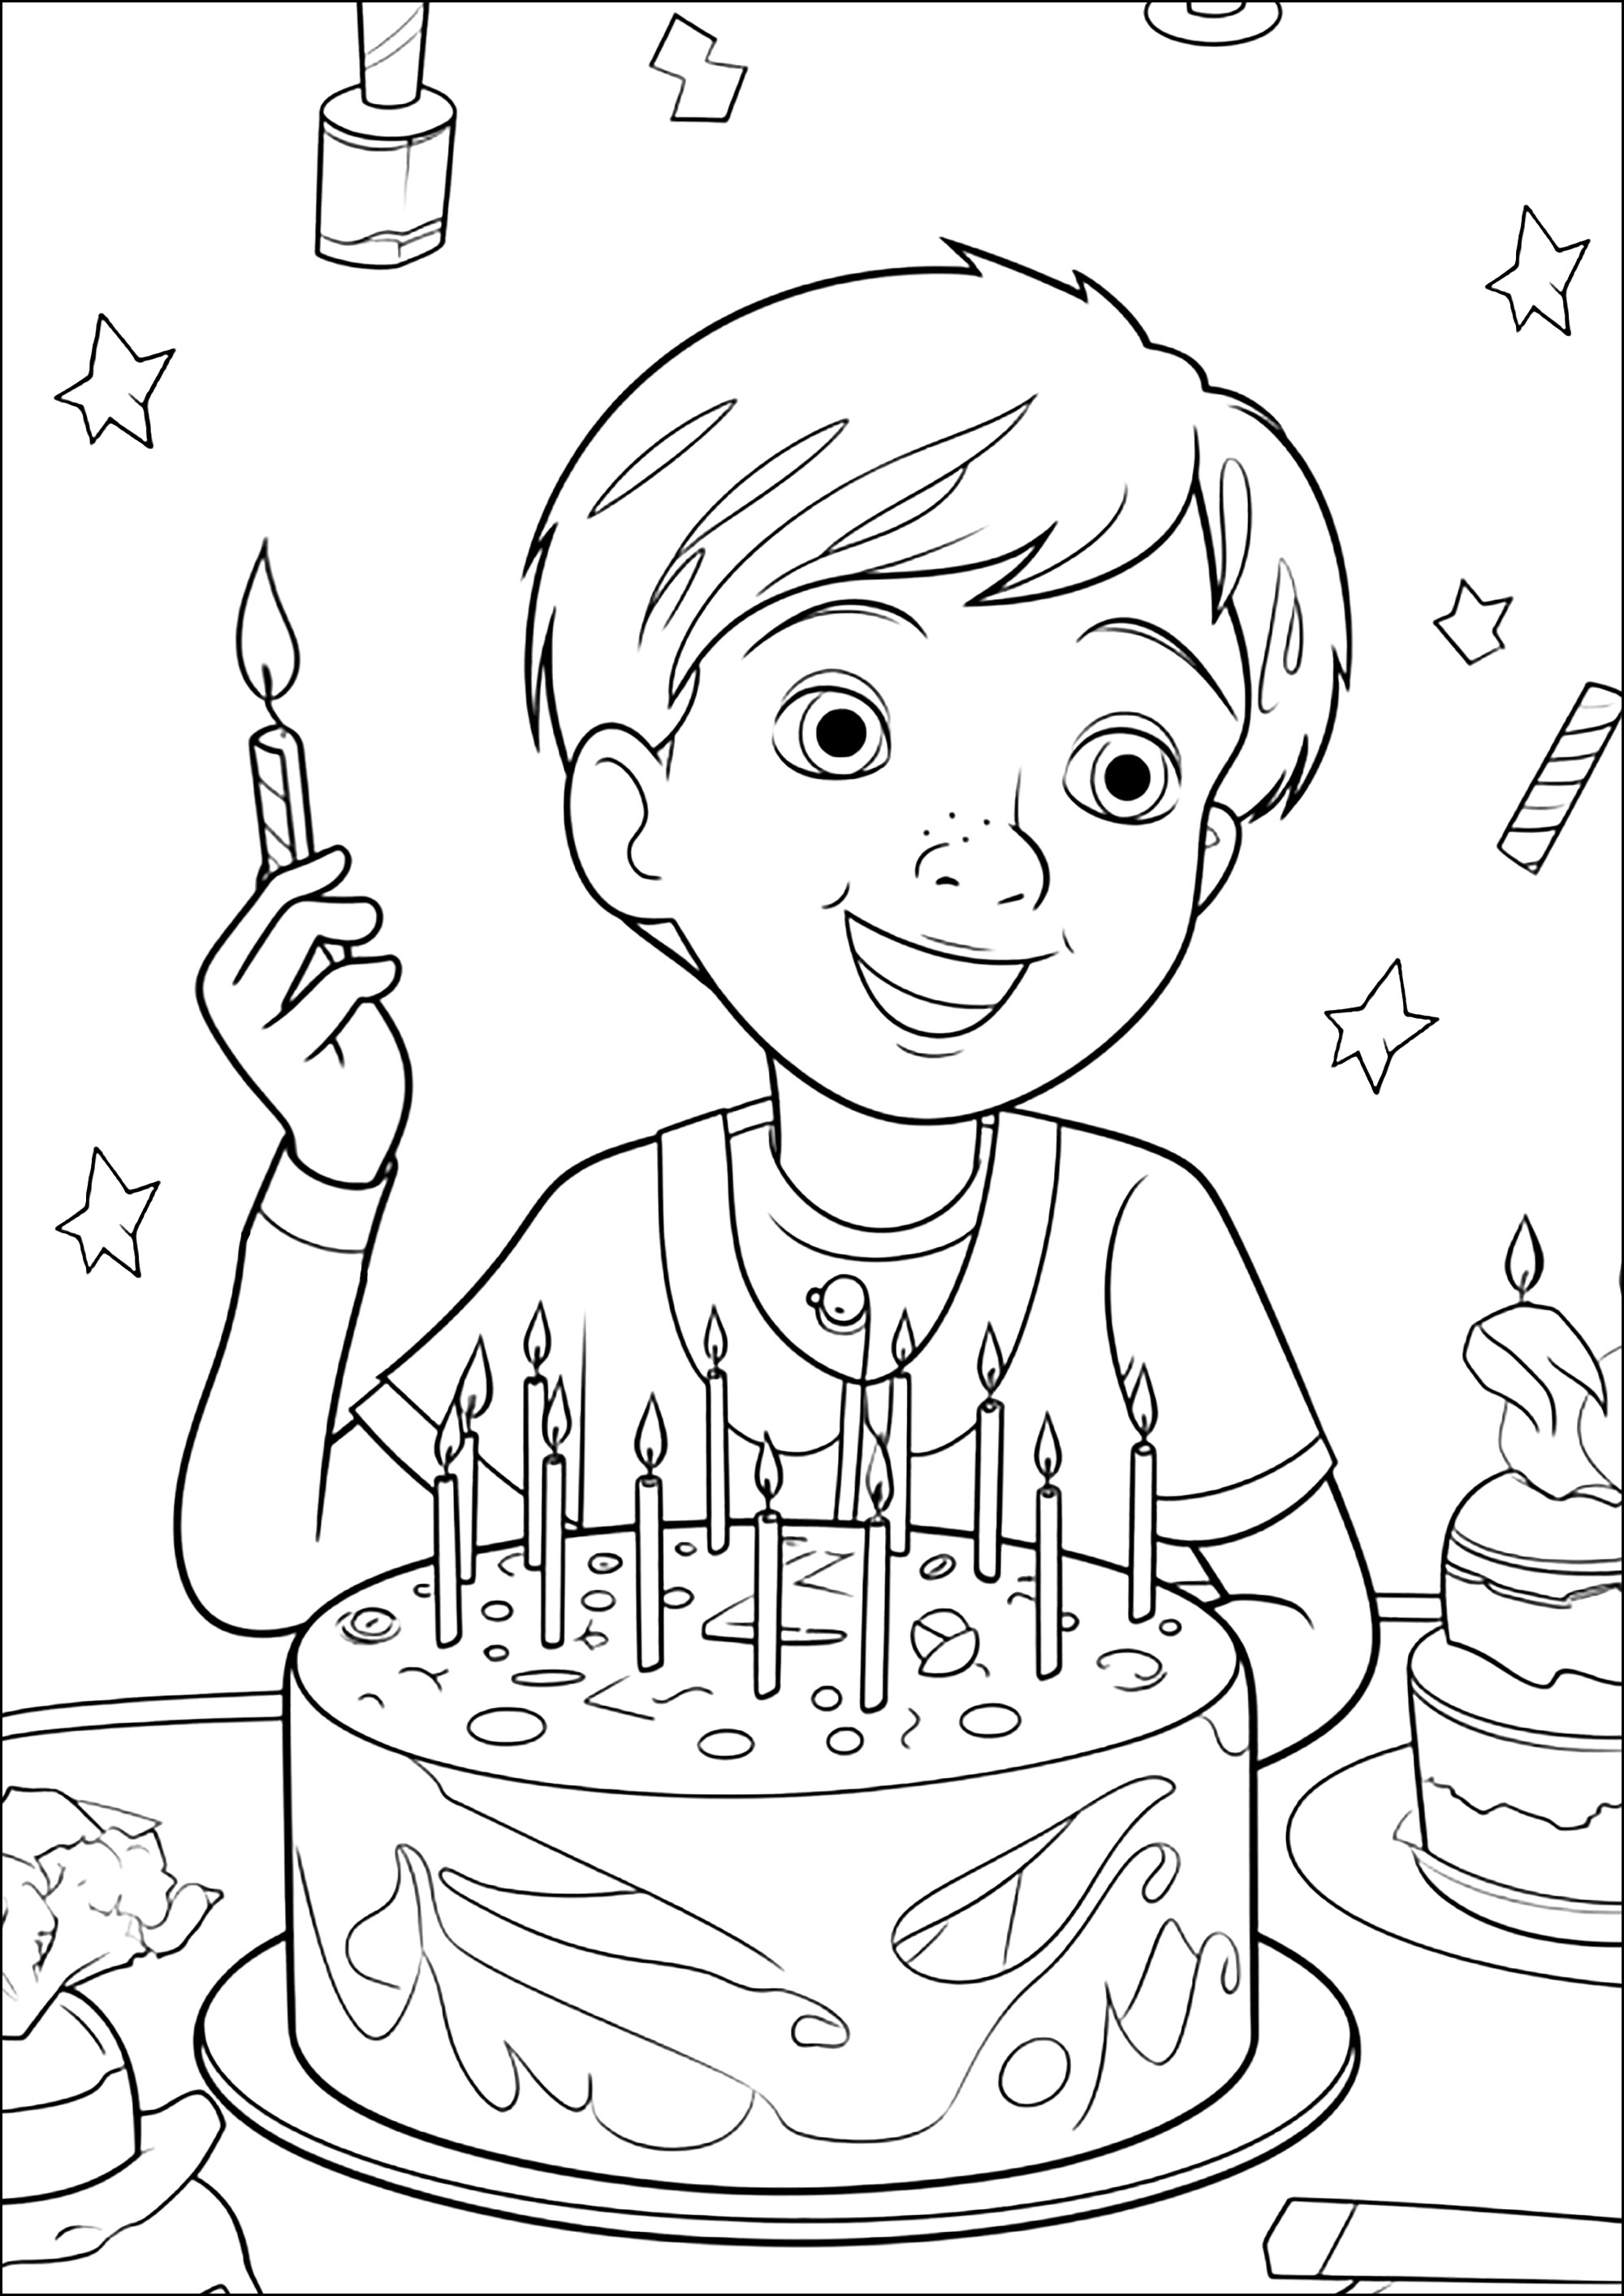 A boy celebrating his birthday with a pretty cake